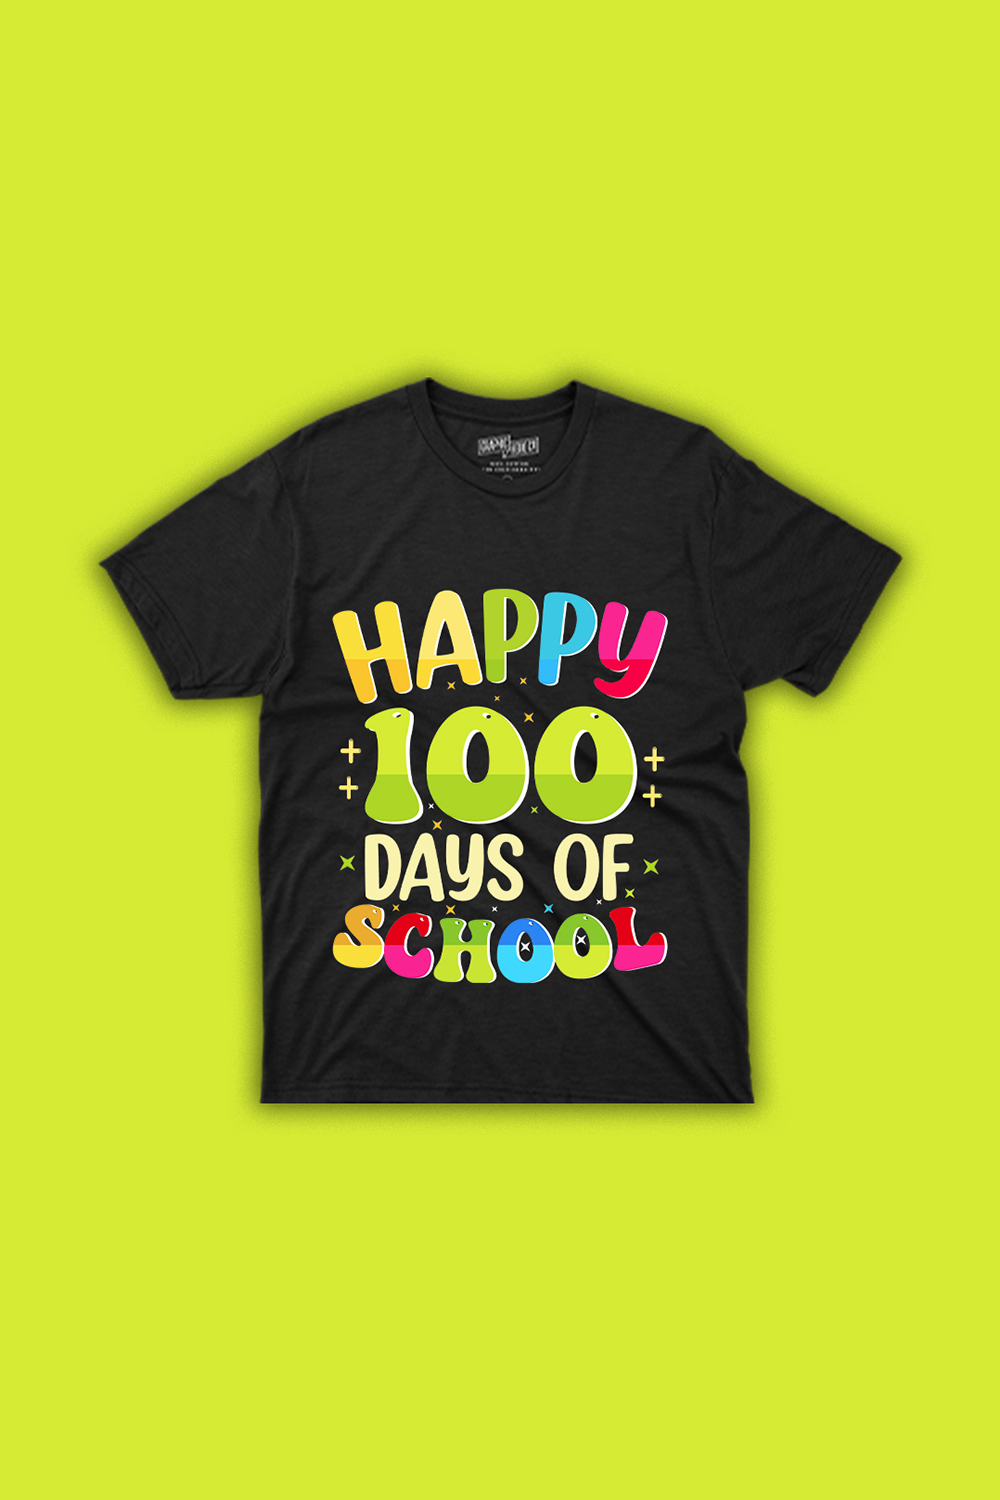 100 Days of School Quote T-shirt Design Vector Pinterest image.